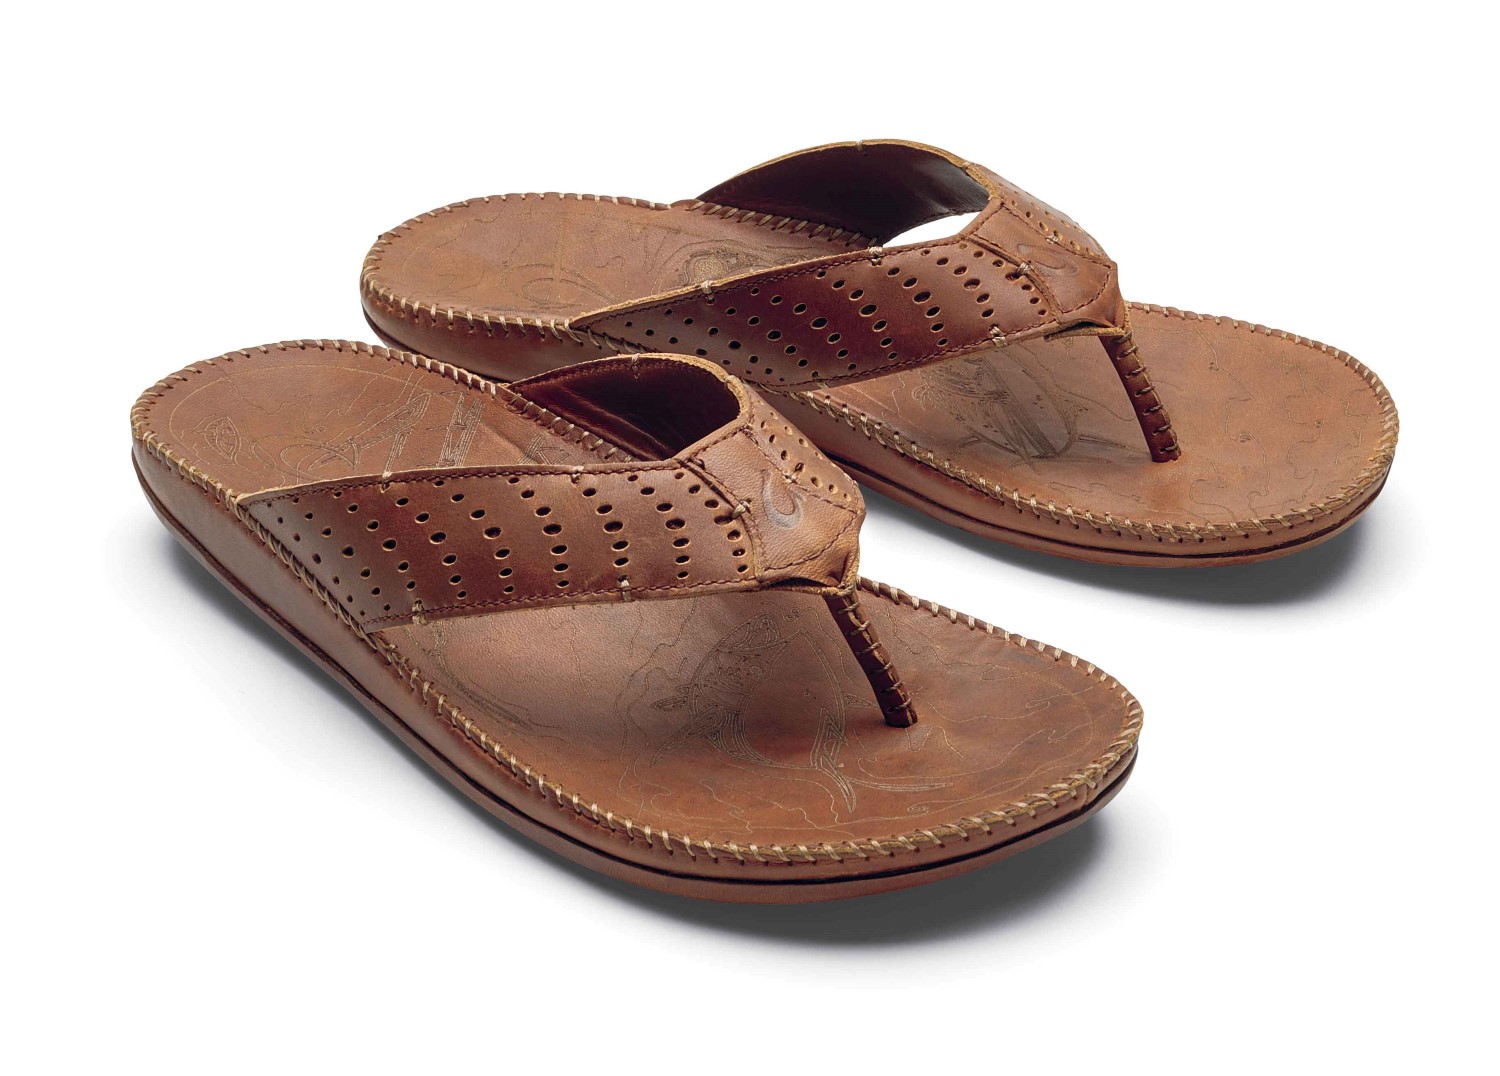 Olukai Hoe Men s Leather Beach Sandals  Free Shipping